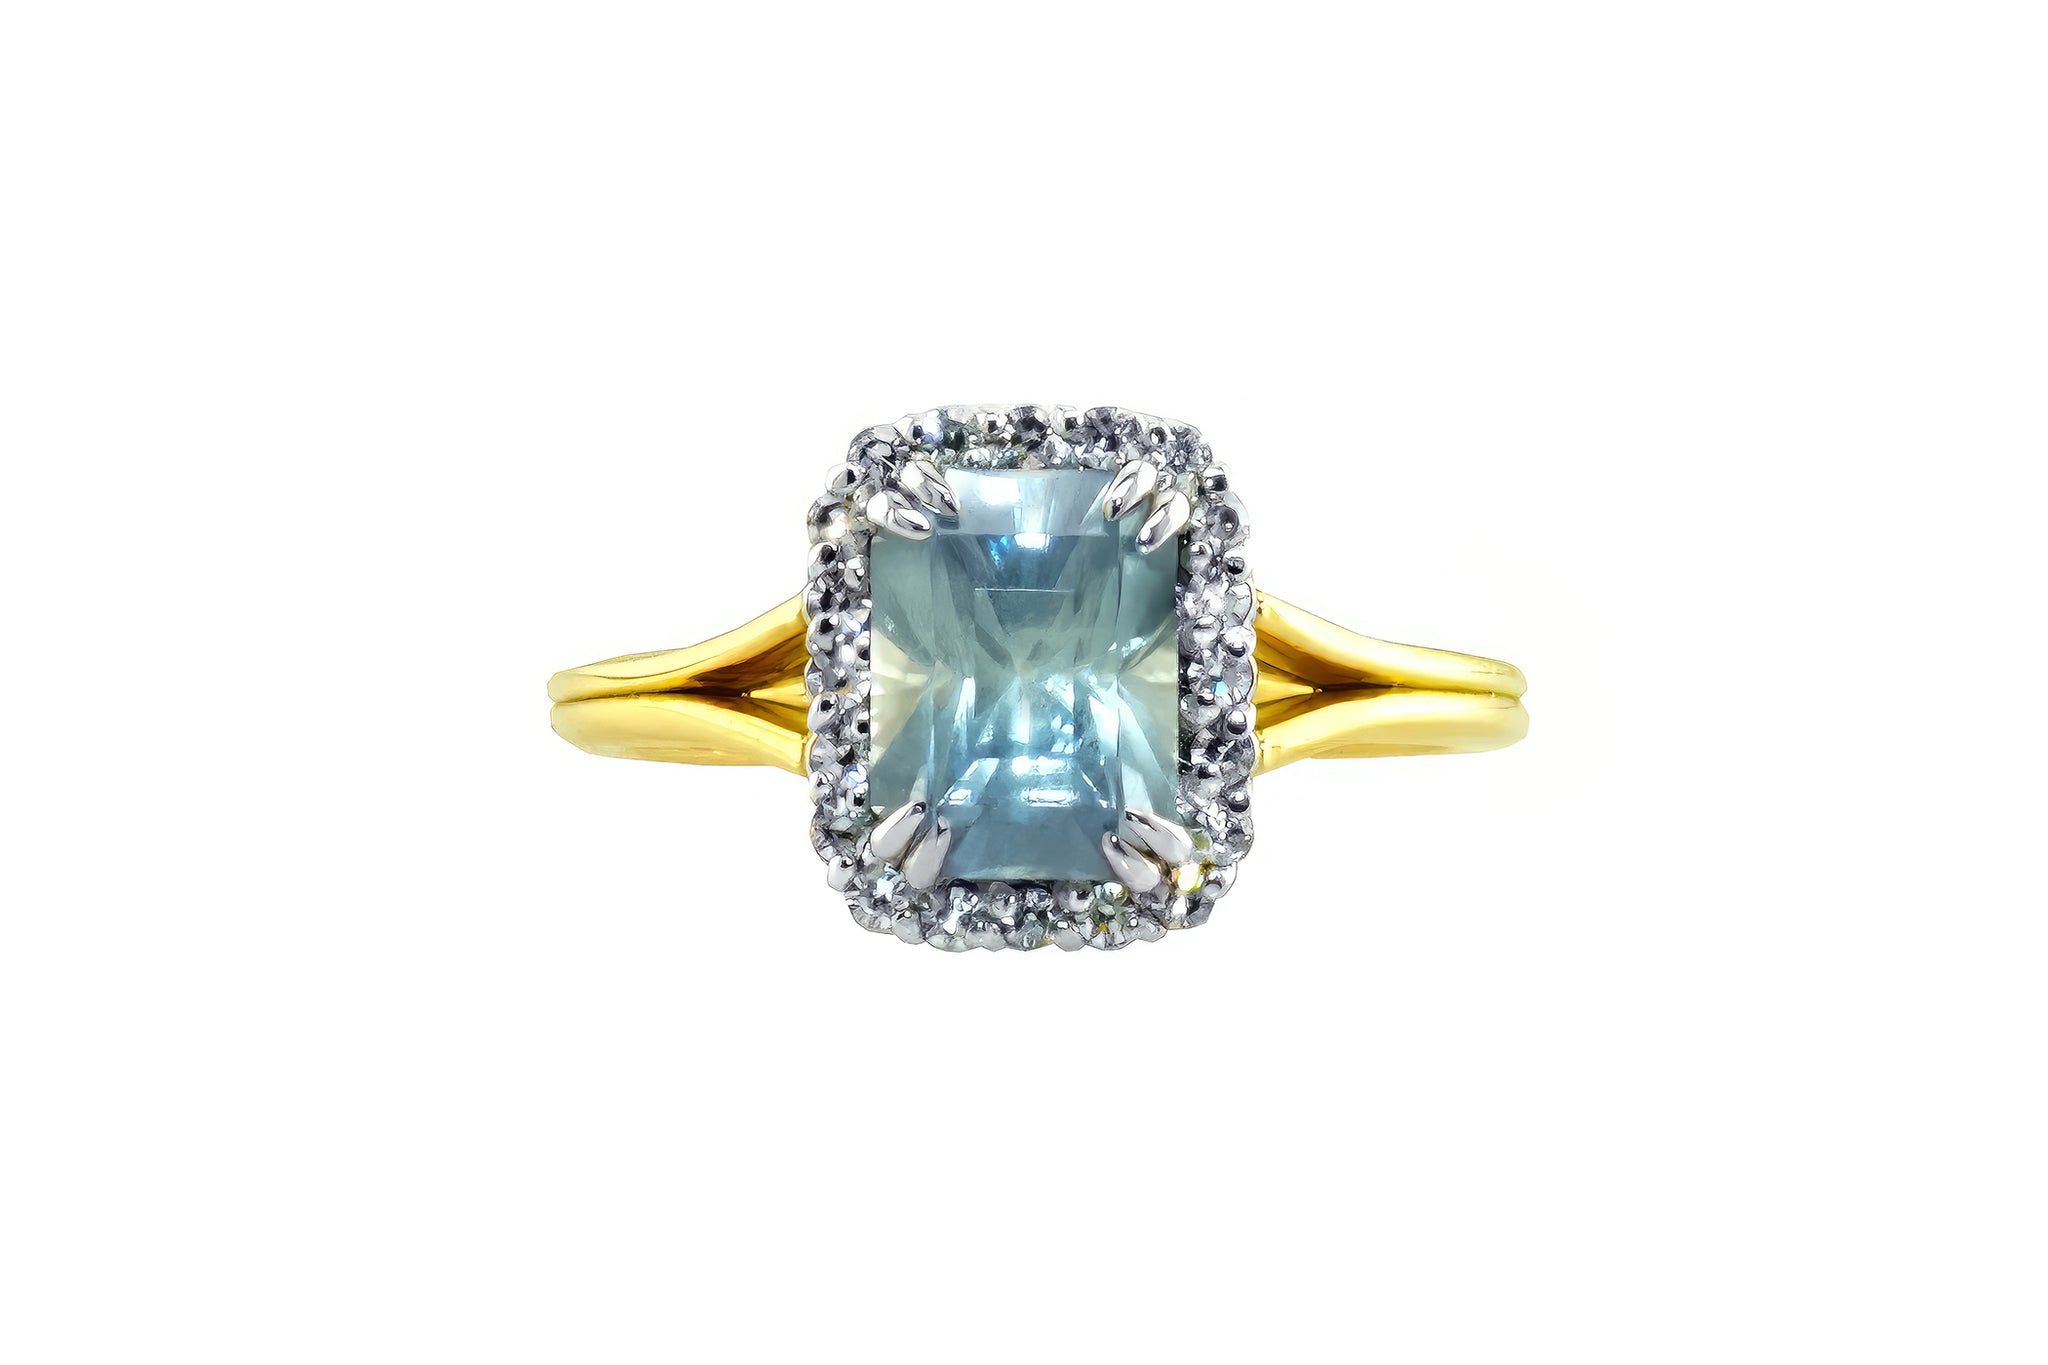 Octagonal Cut Untreated Greenish Blue Montana Sapphire Ring - S. Kind & Co